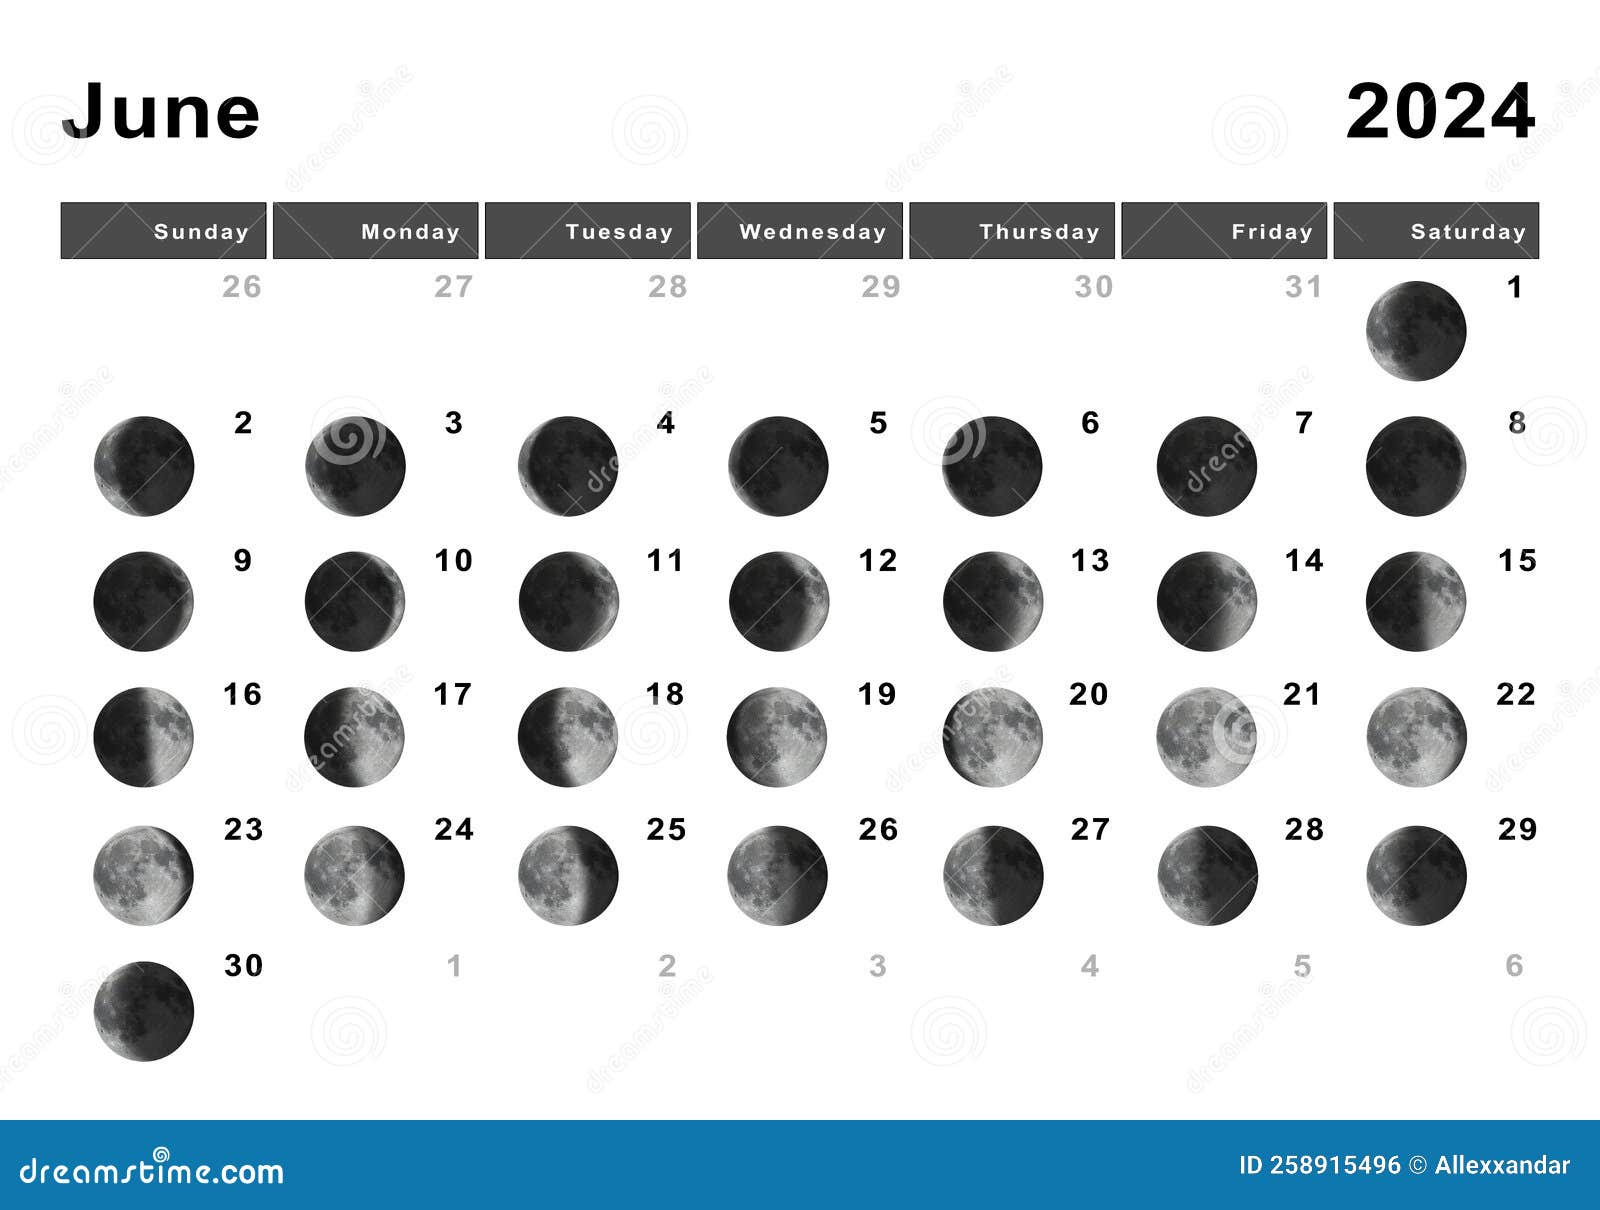 June 2024 Lunar Calendar, Moon Cycles Stock Illustration in June Lunar Calendar 2024